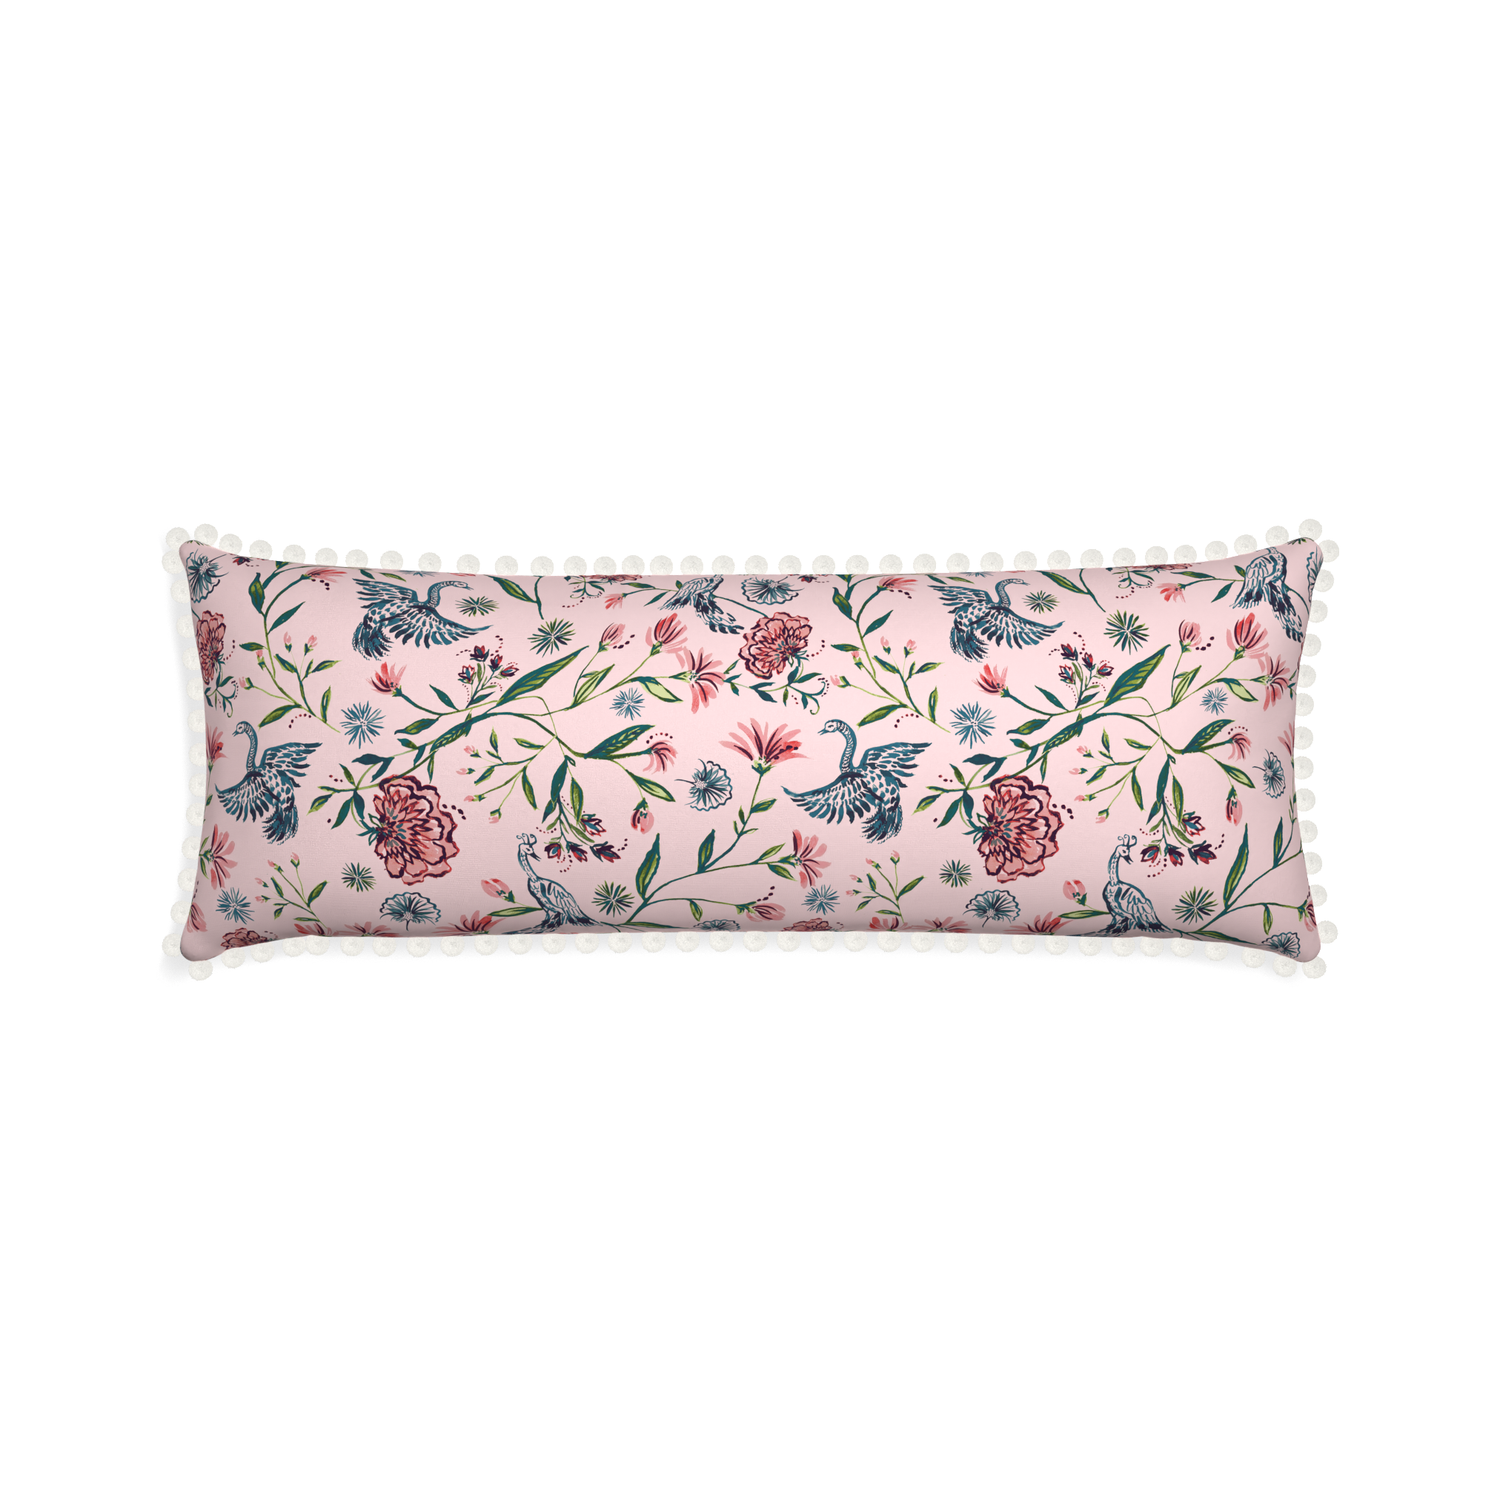 Xl-lumbar daphne rose custom pillow with snow pom pom on white background